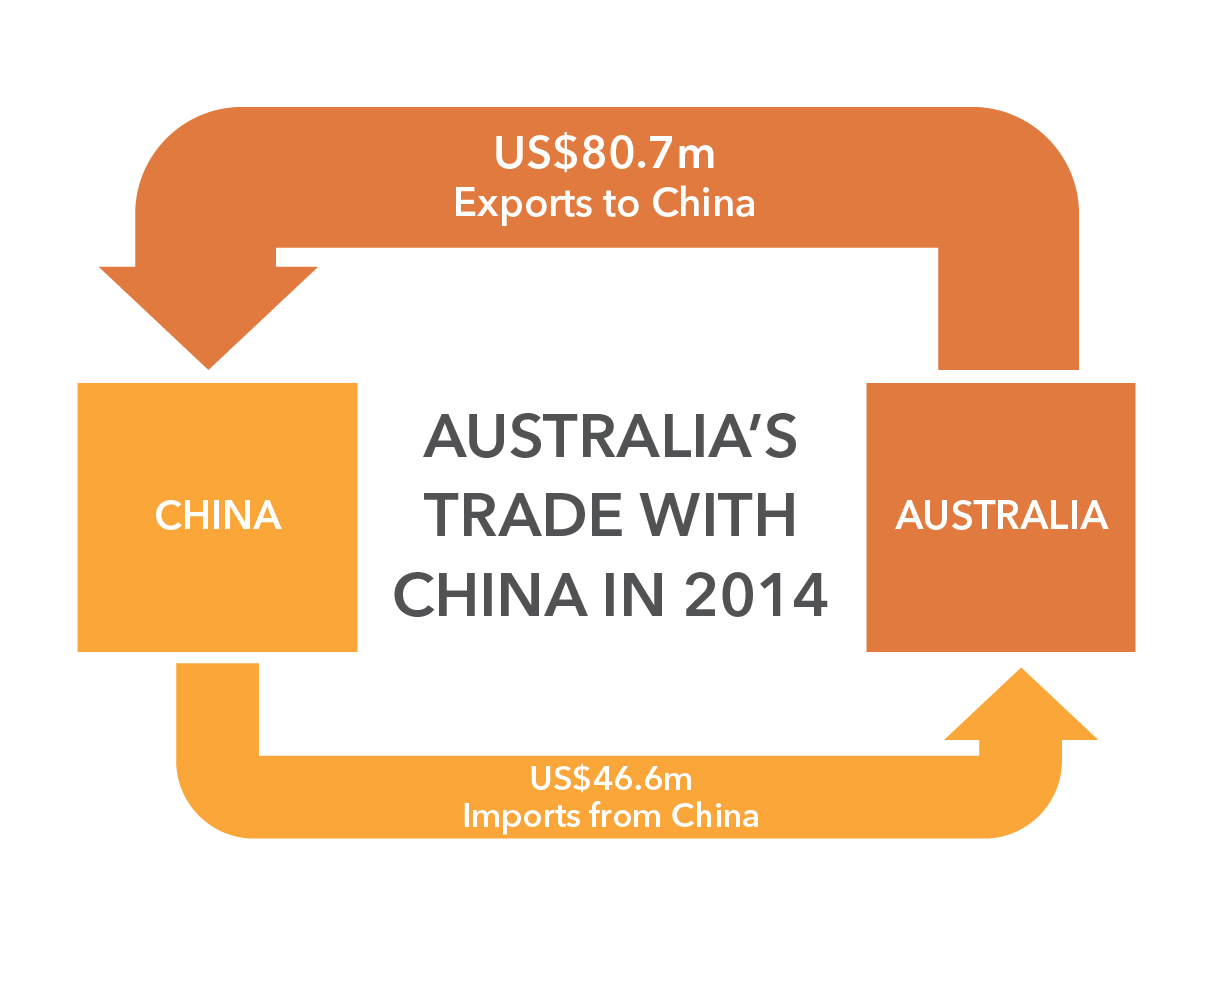 7. Australias trade with China